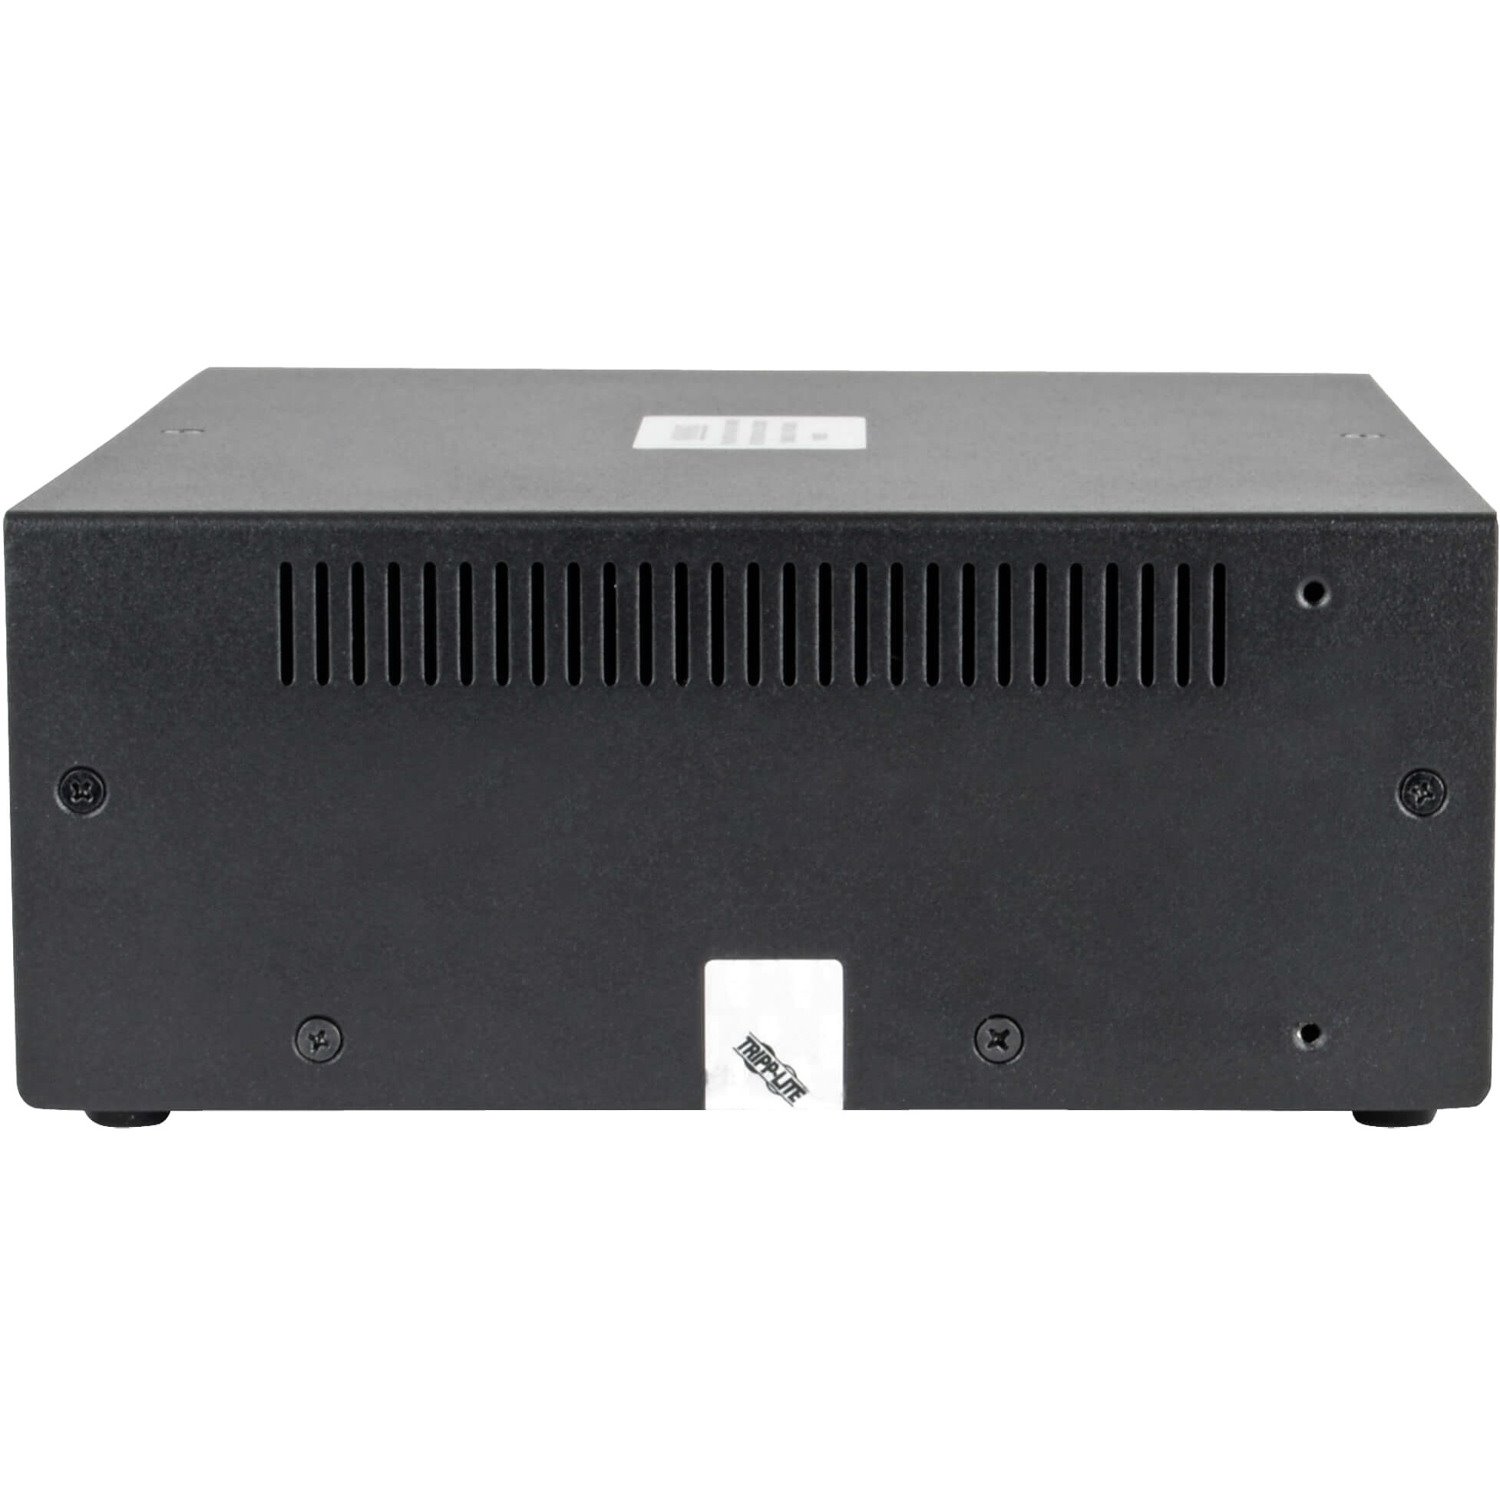 Tripp Lite by Eaton Secure KVM Switch, 2-Port, DVI to DVI, NIAP PP3.0 Certified, Audio, Single Monitor, TAA